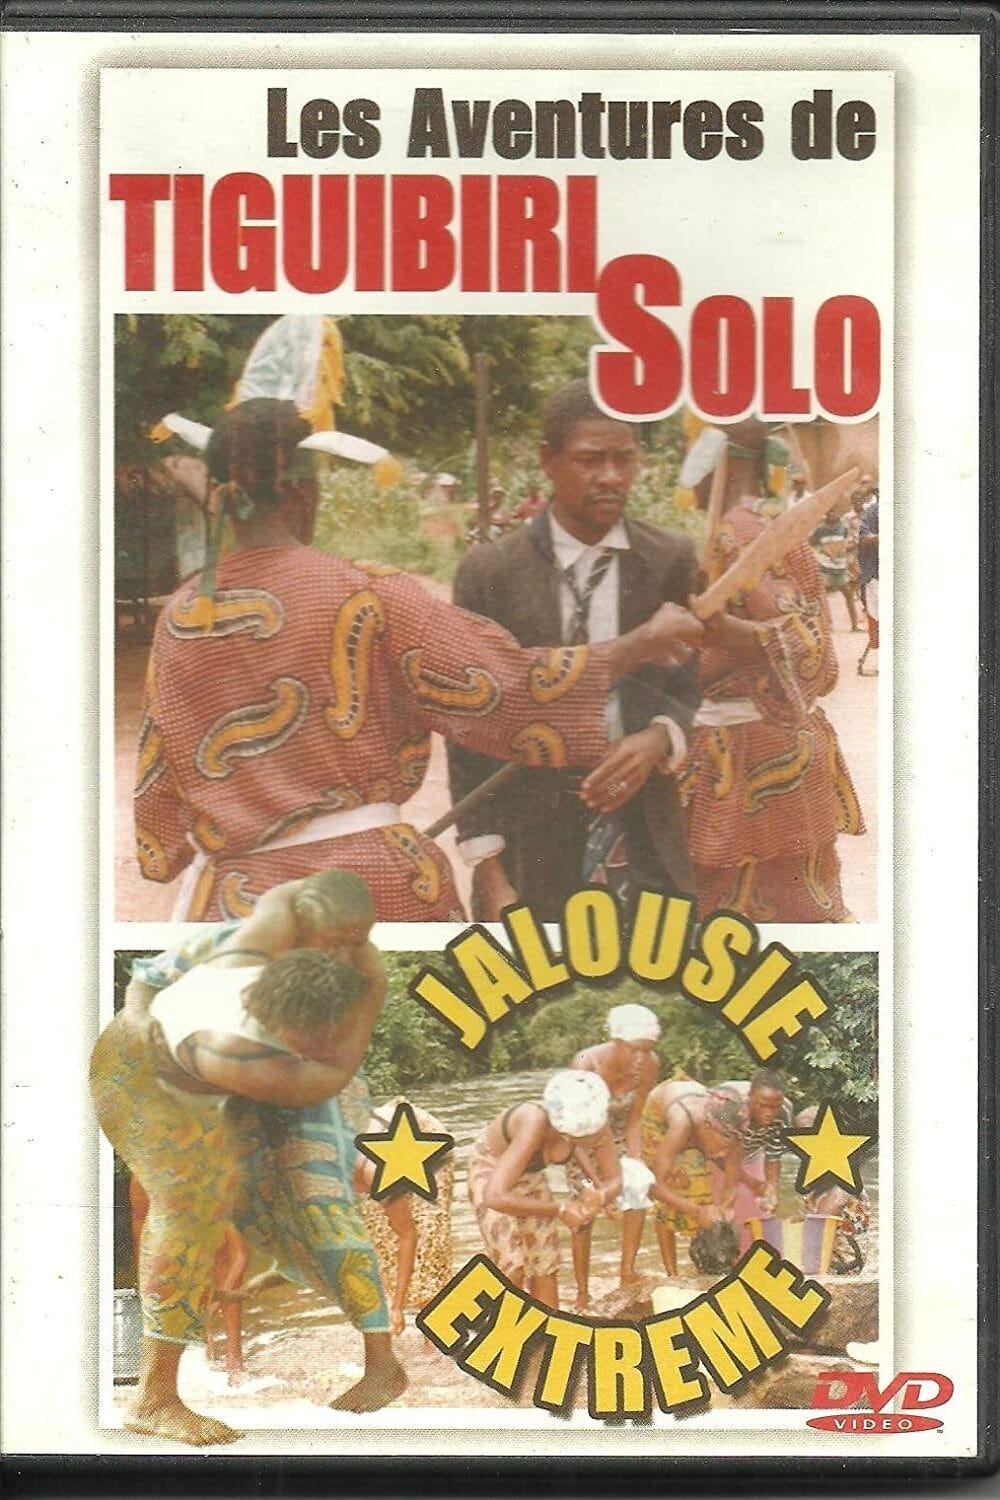 The Adventures of Tiguibiri Solo: Extreme Jealousy